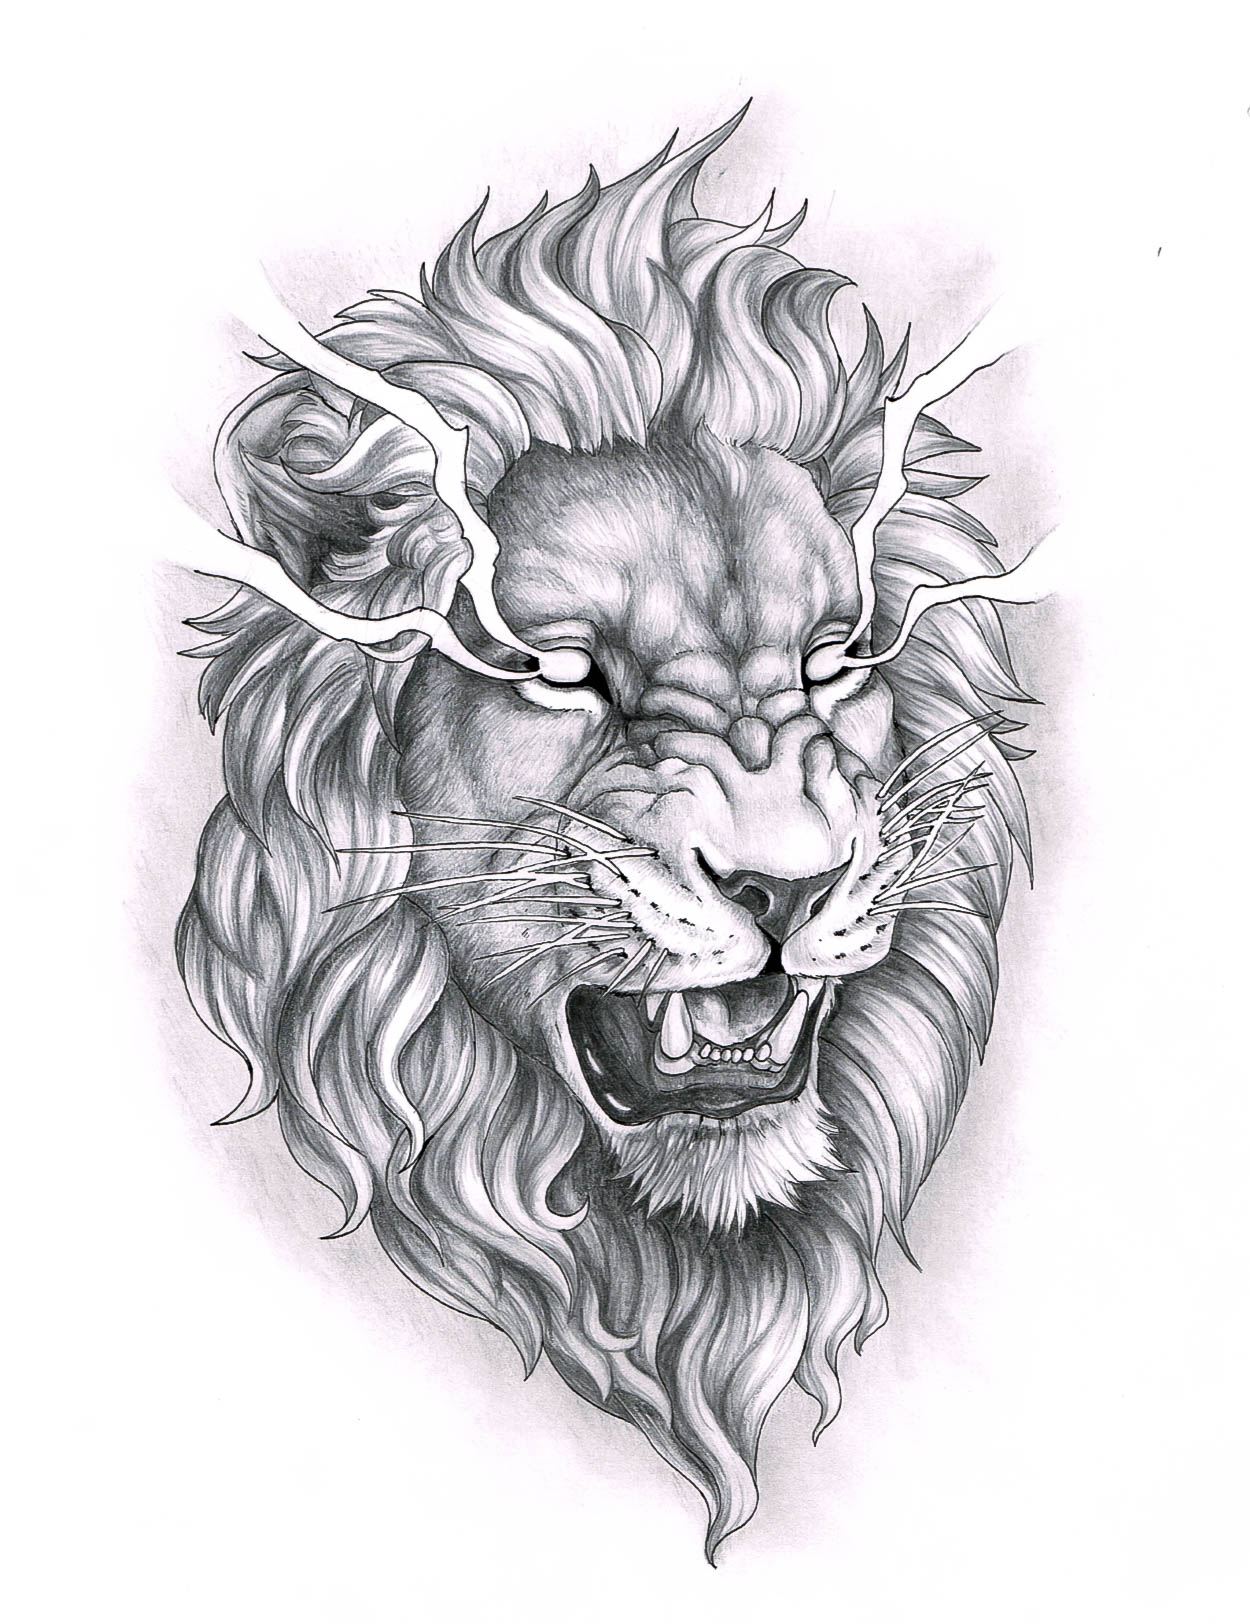 49210 Lion Tattoo Designs Images Stock Photos  Vectors  Shutterstock